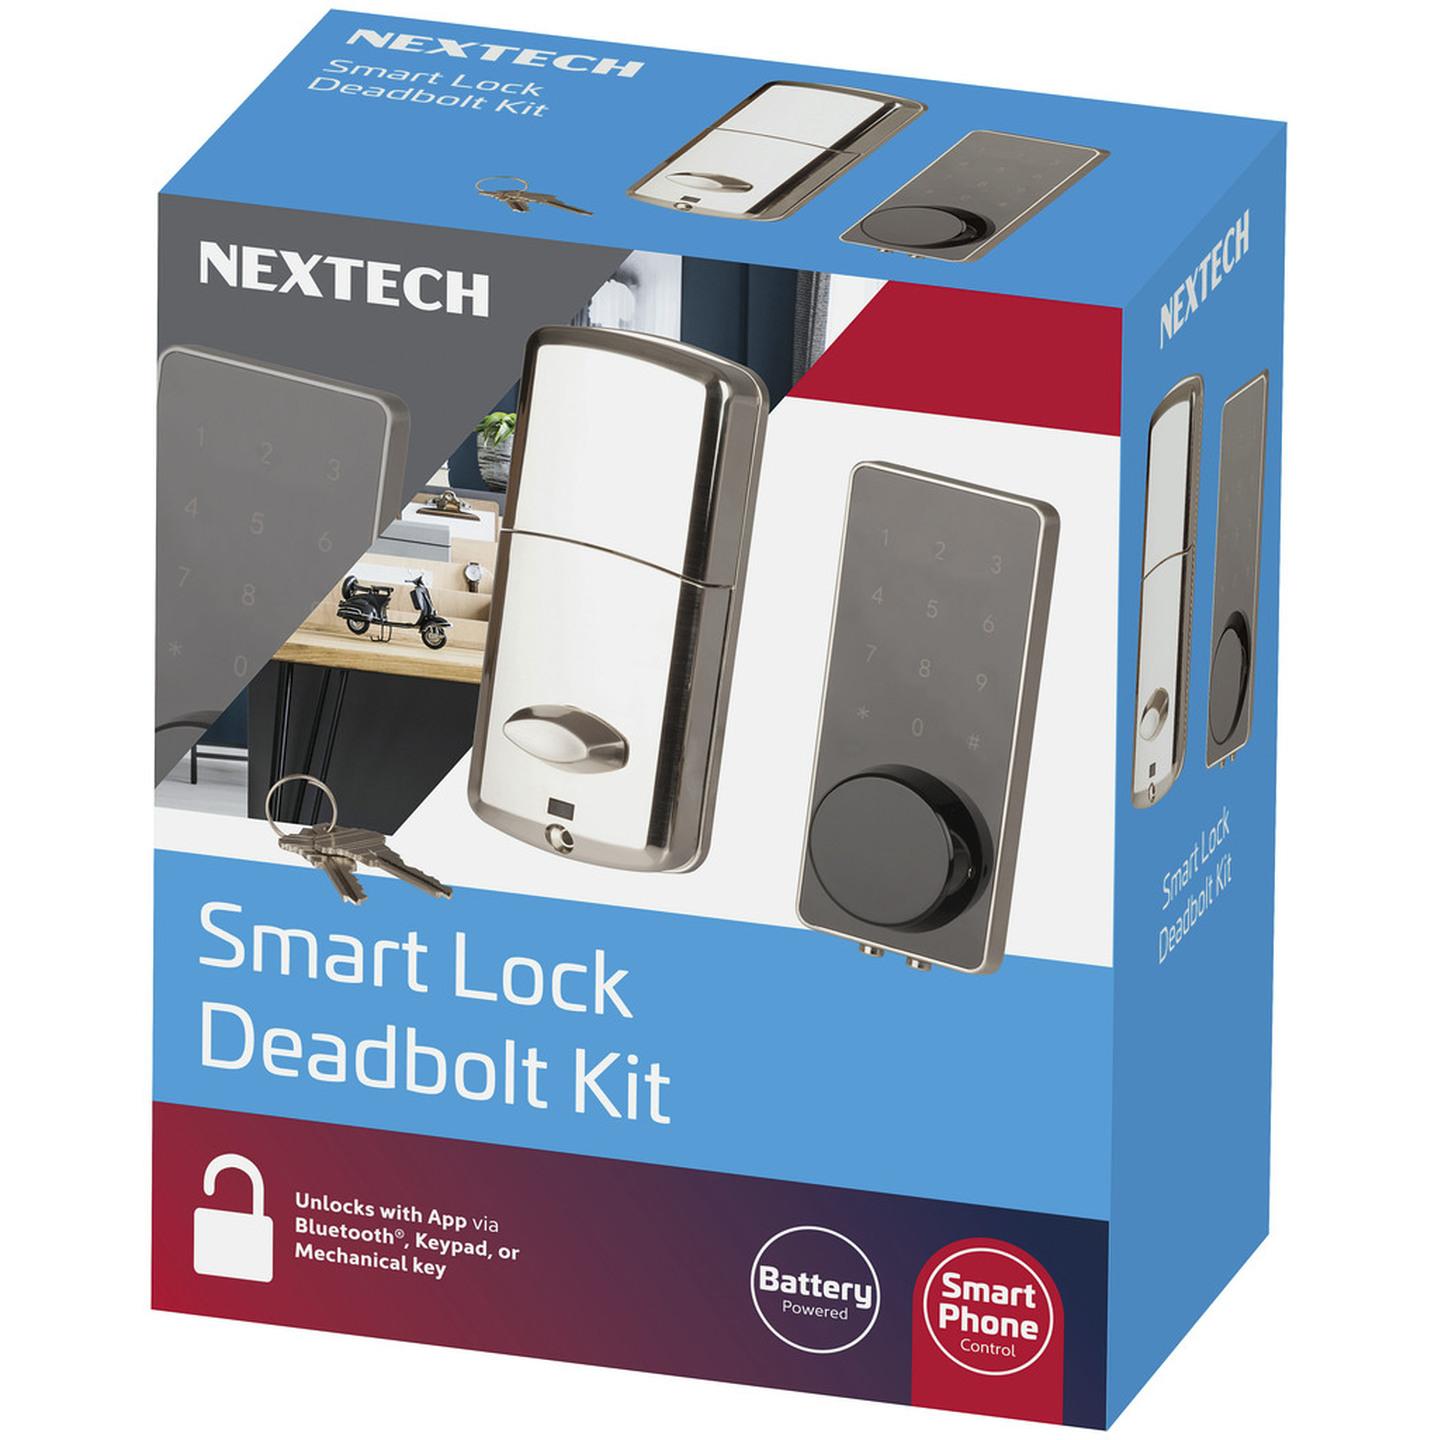 Smart Lock Deadbolt Kit with Bluetooth Technology